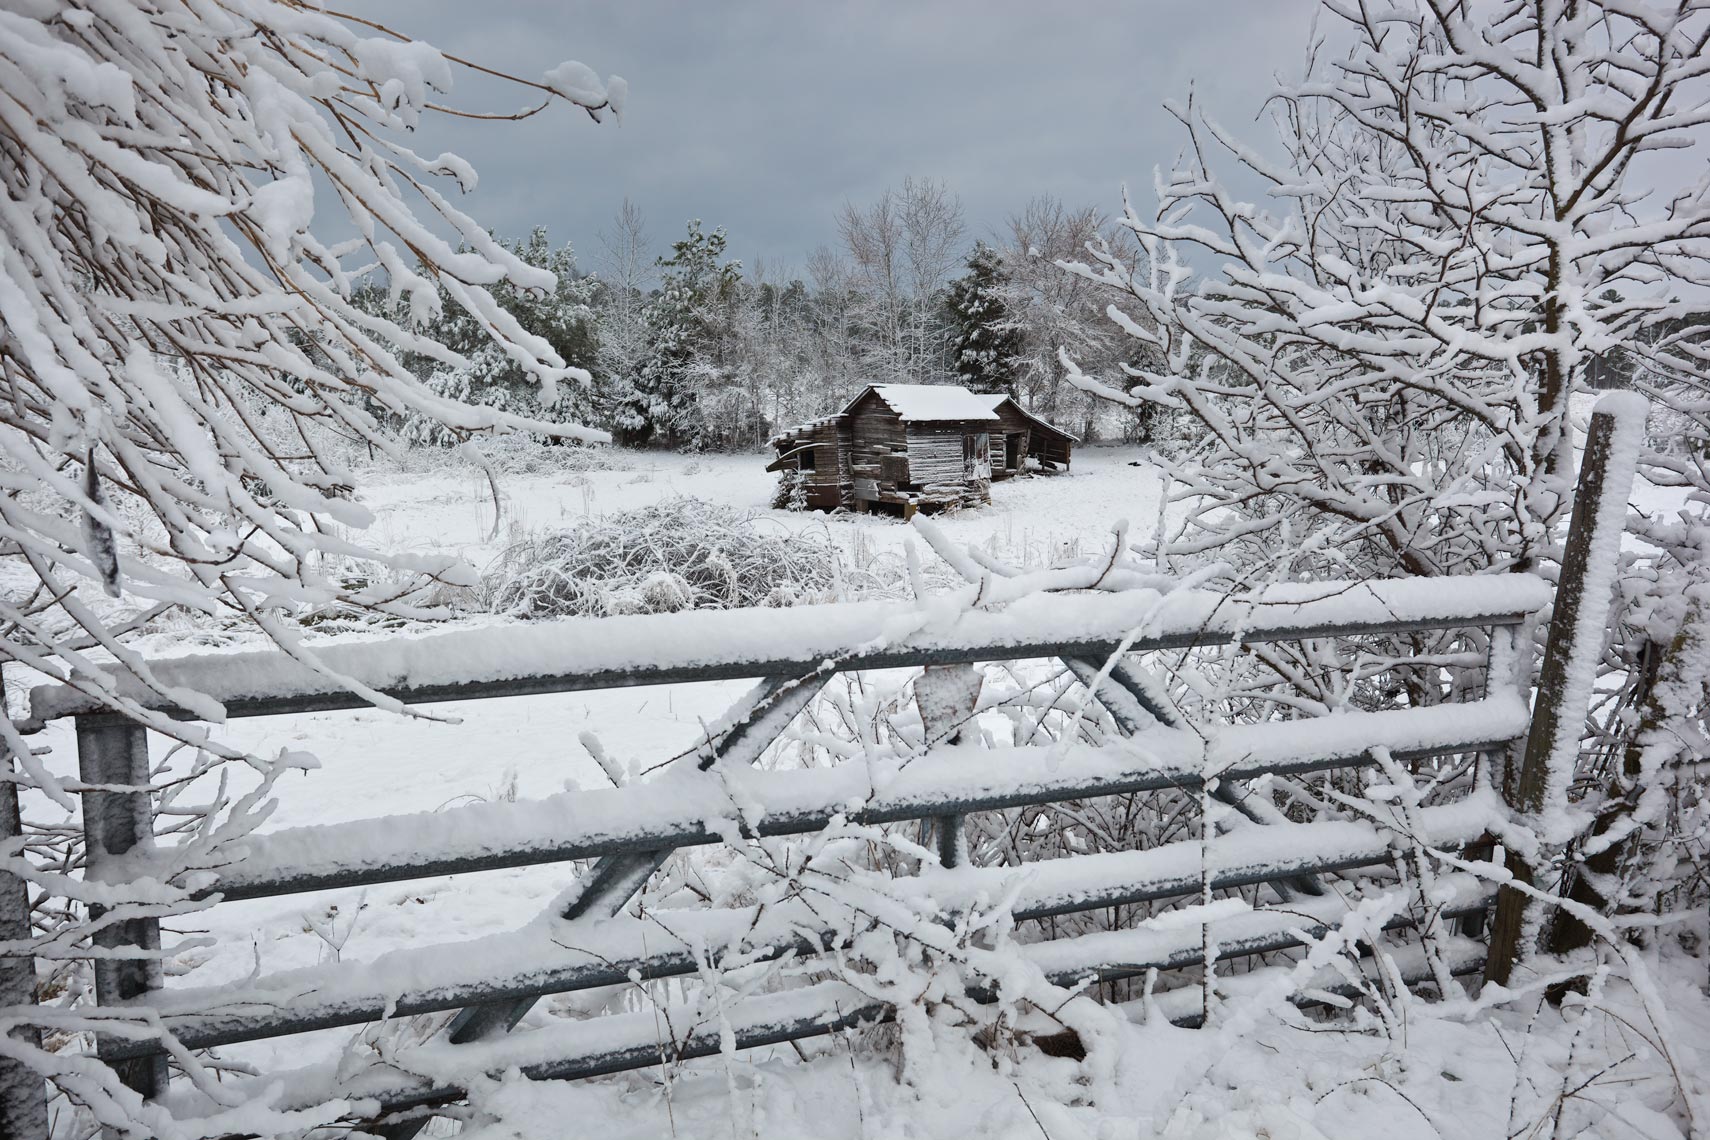 Snowy wooden shack, Chapel Hill, NC